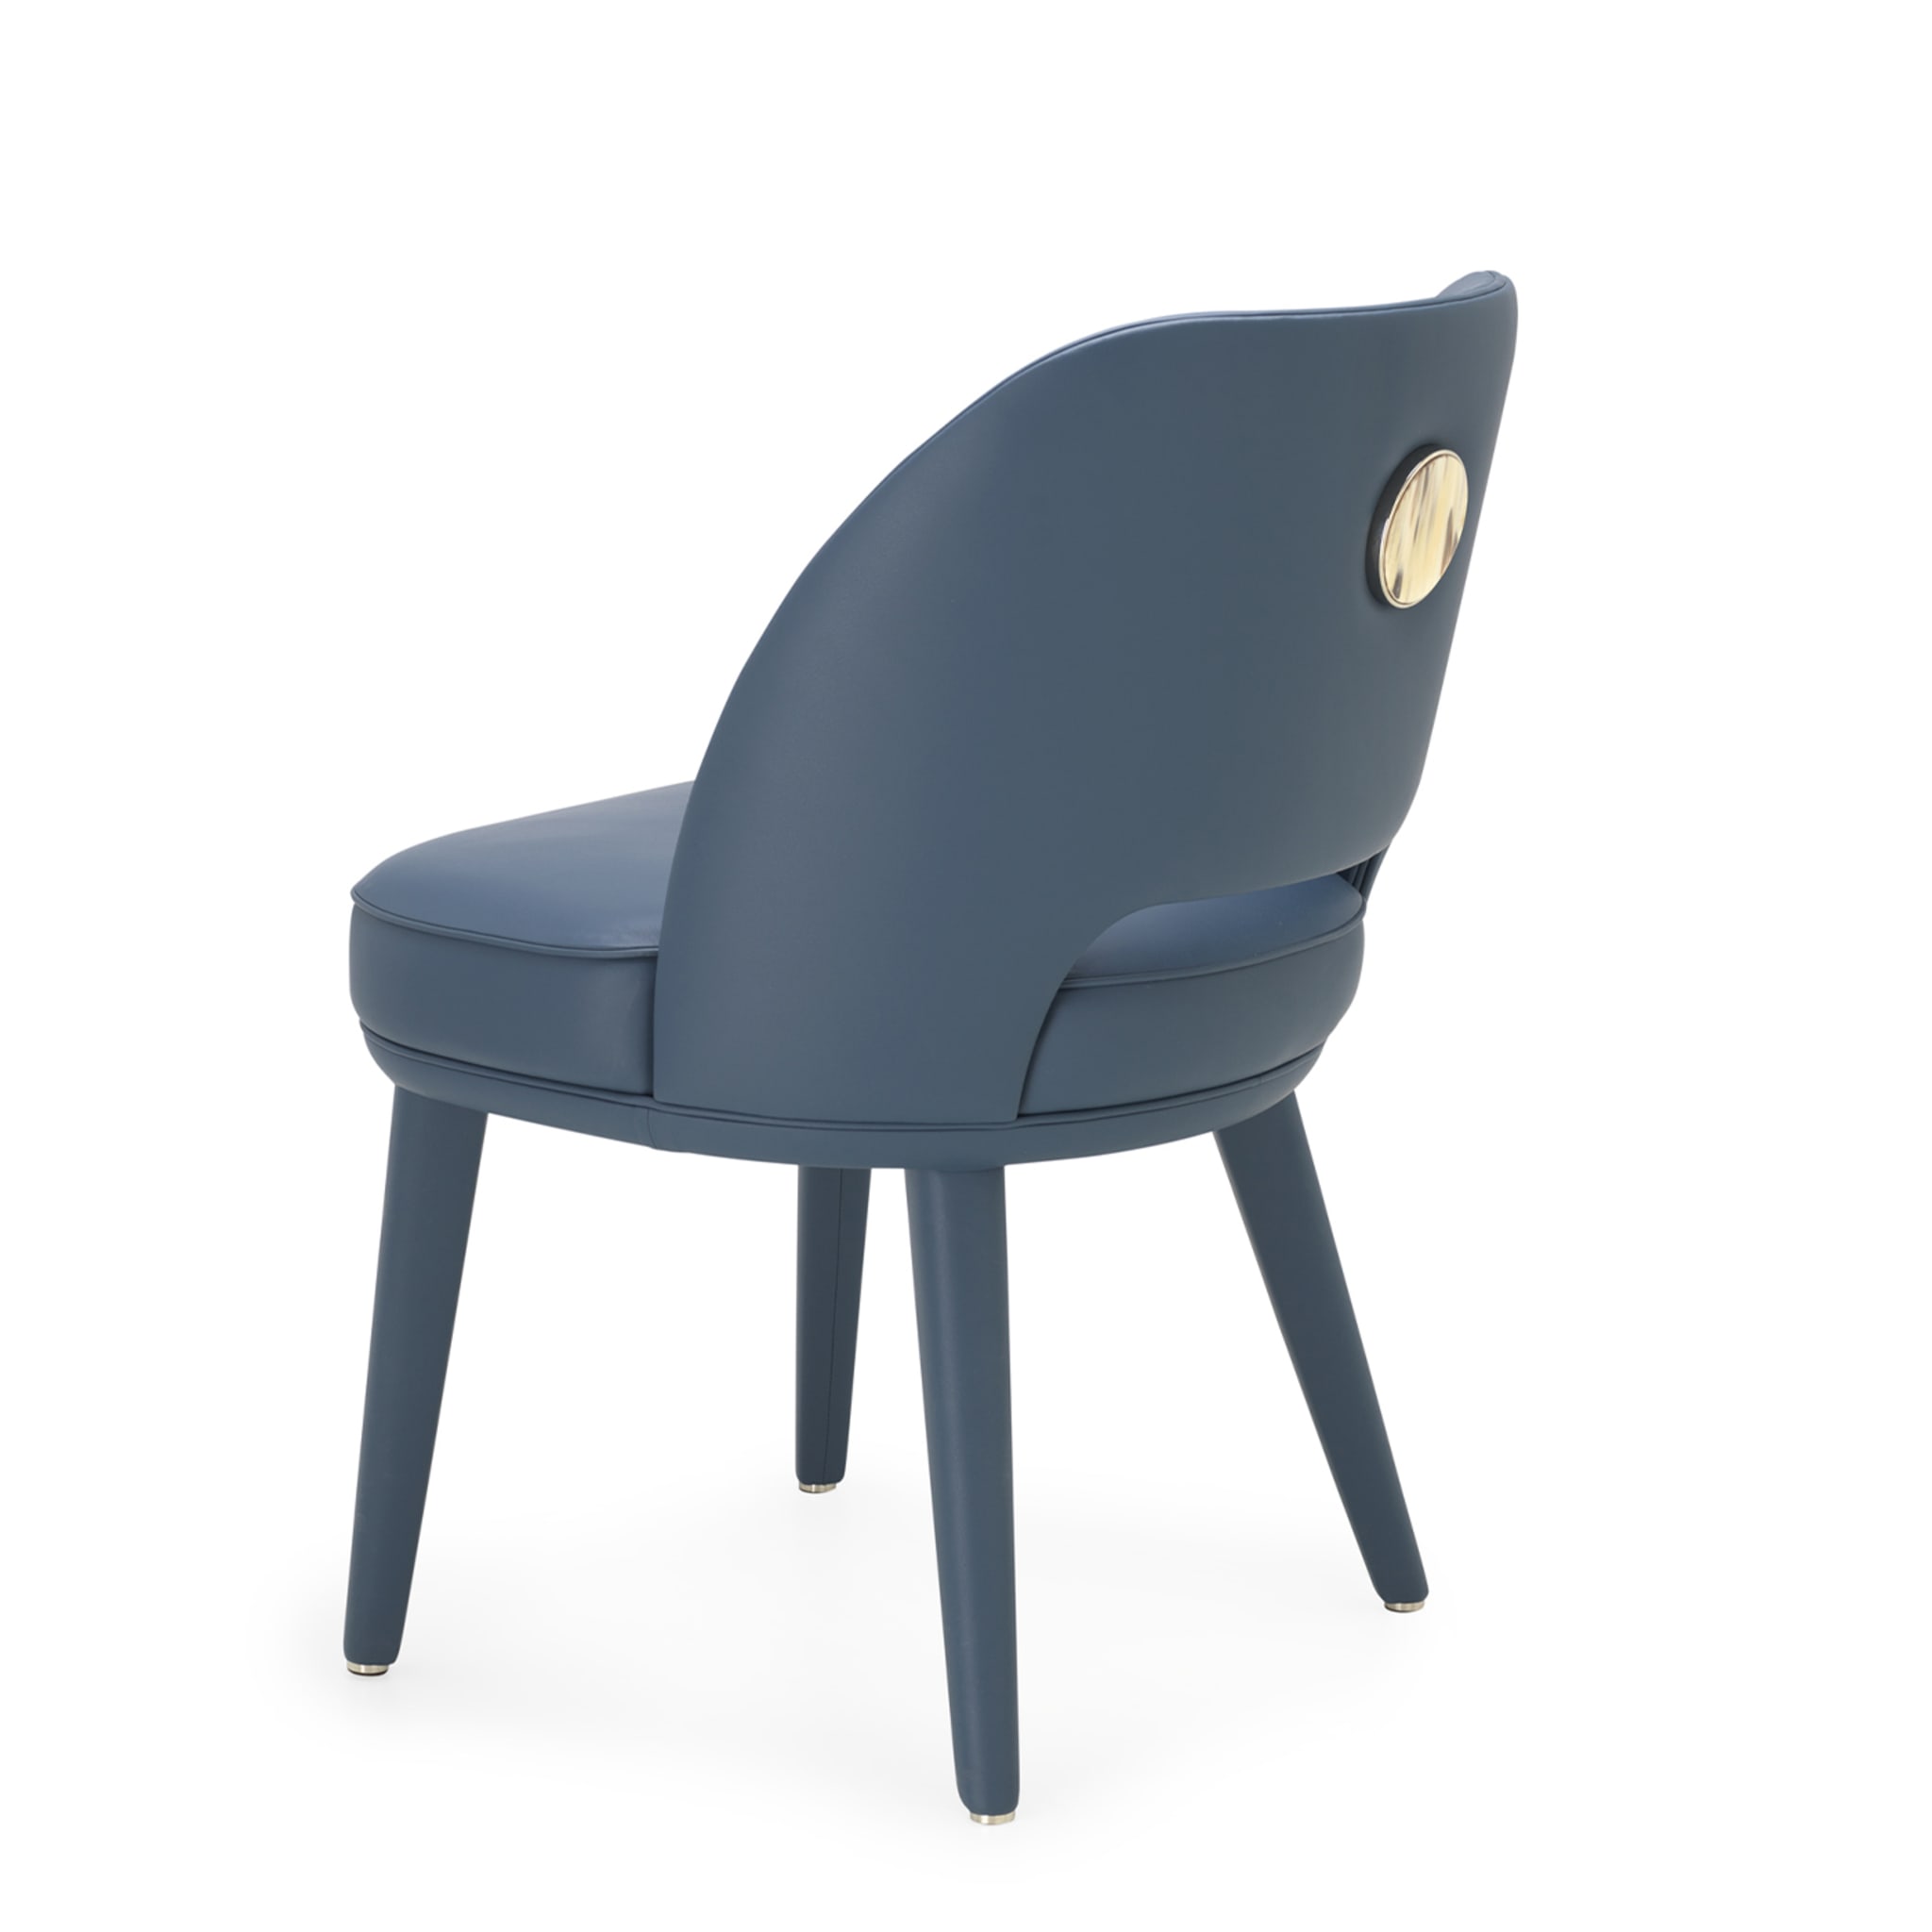 PENELOPE blue chair - Alternative view 2